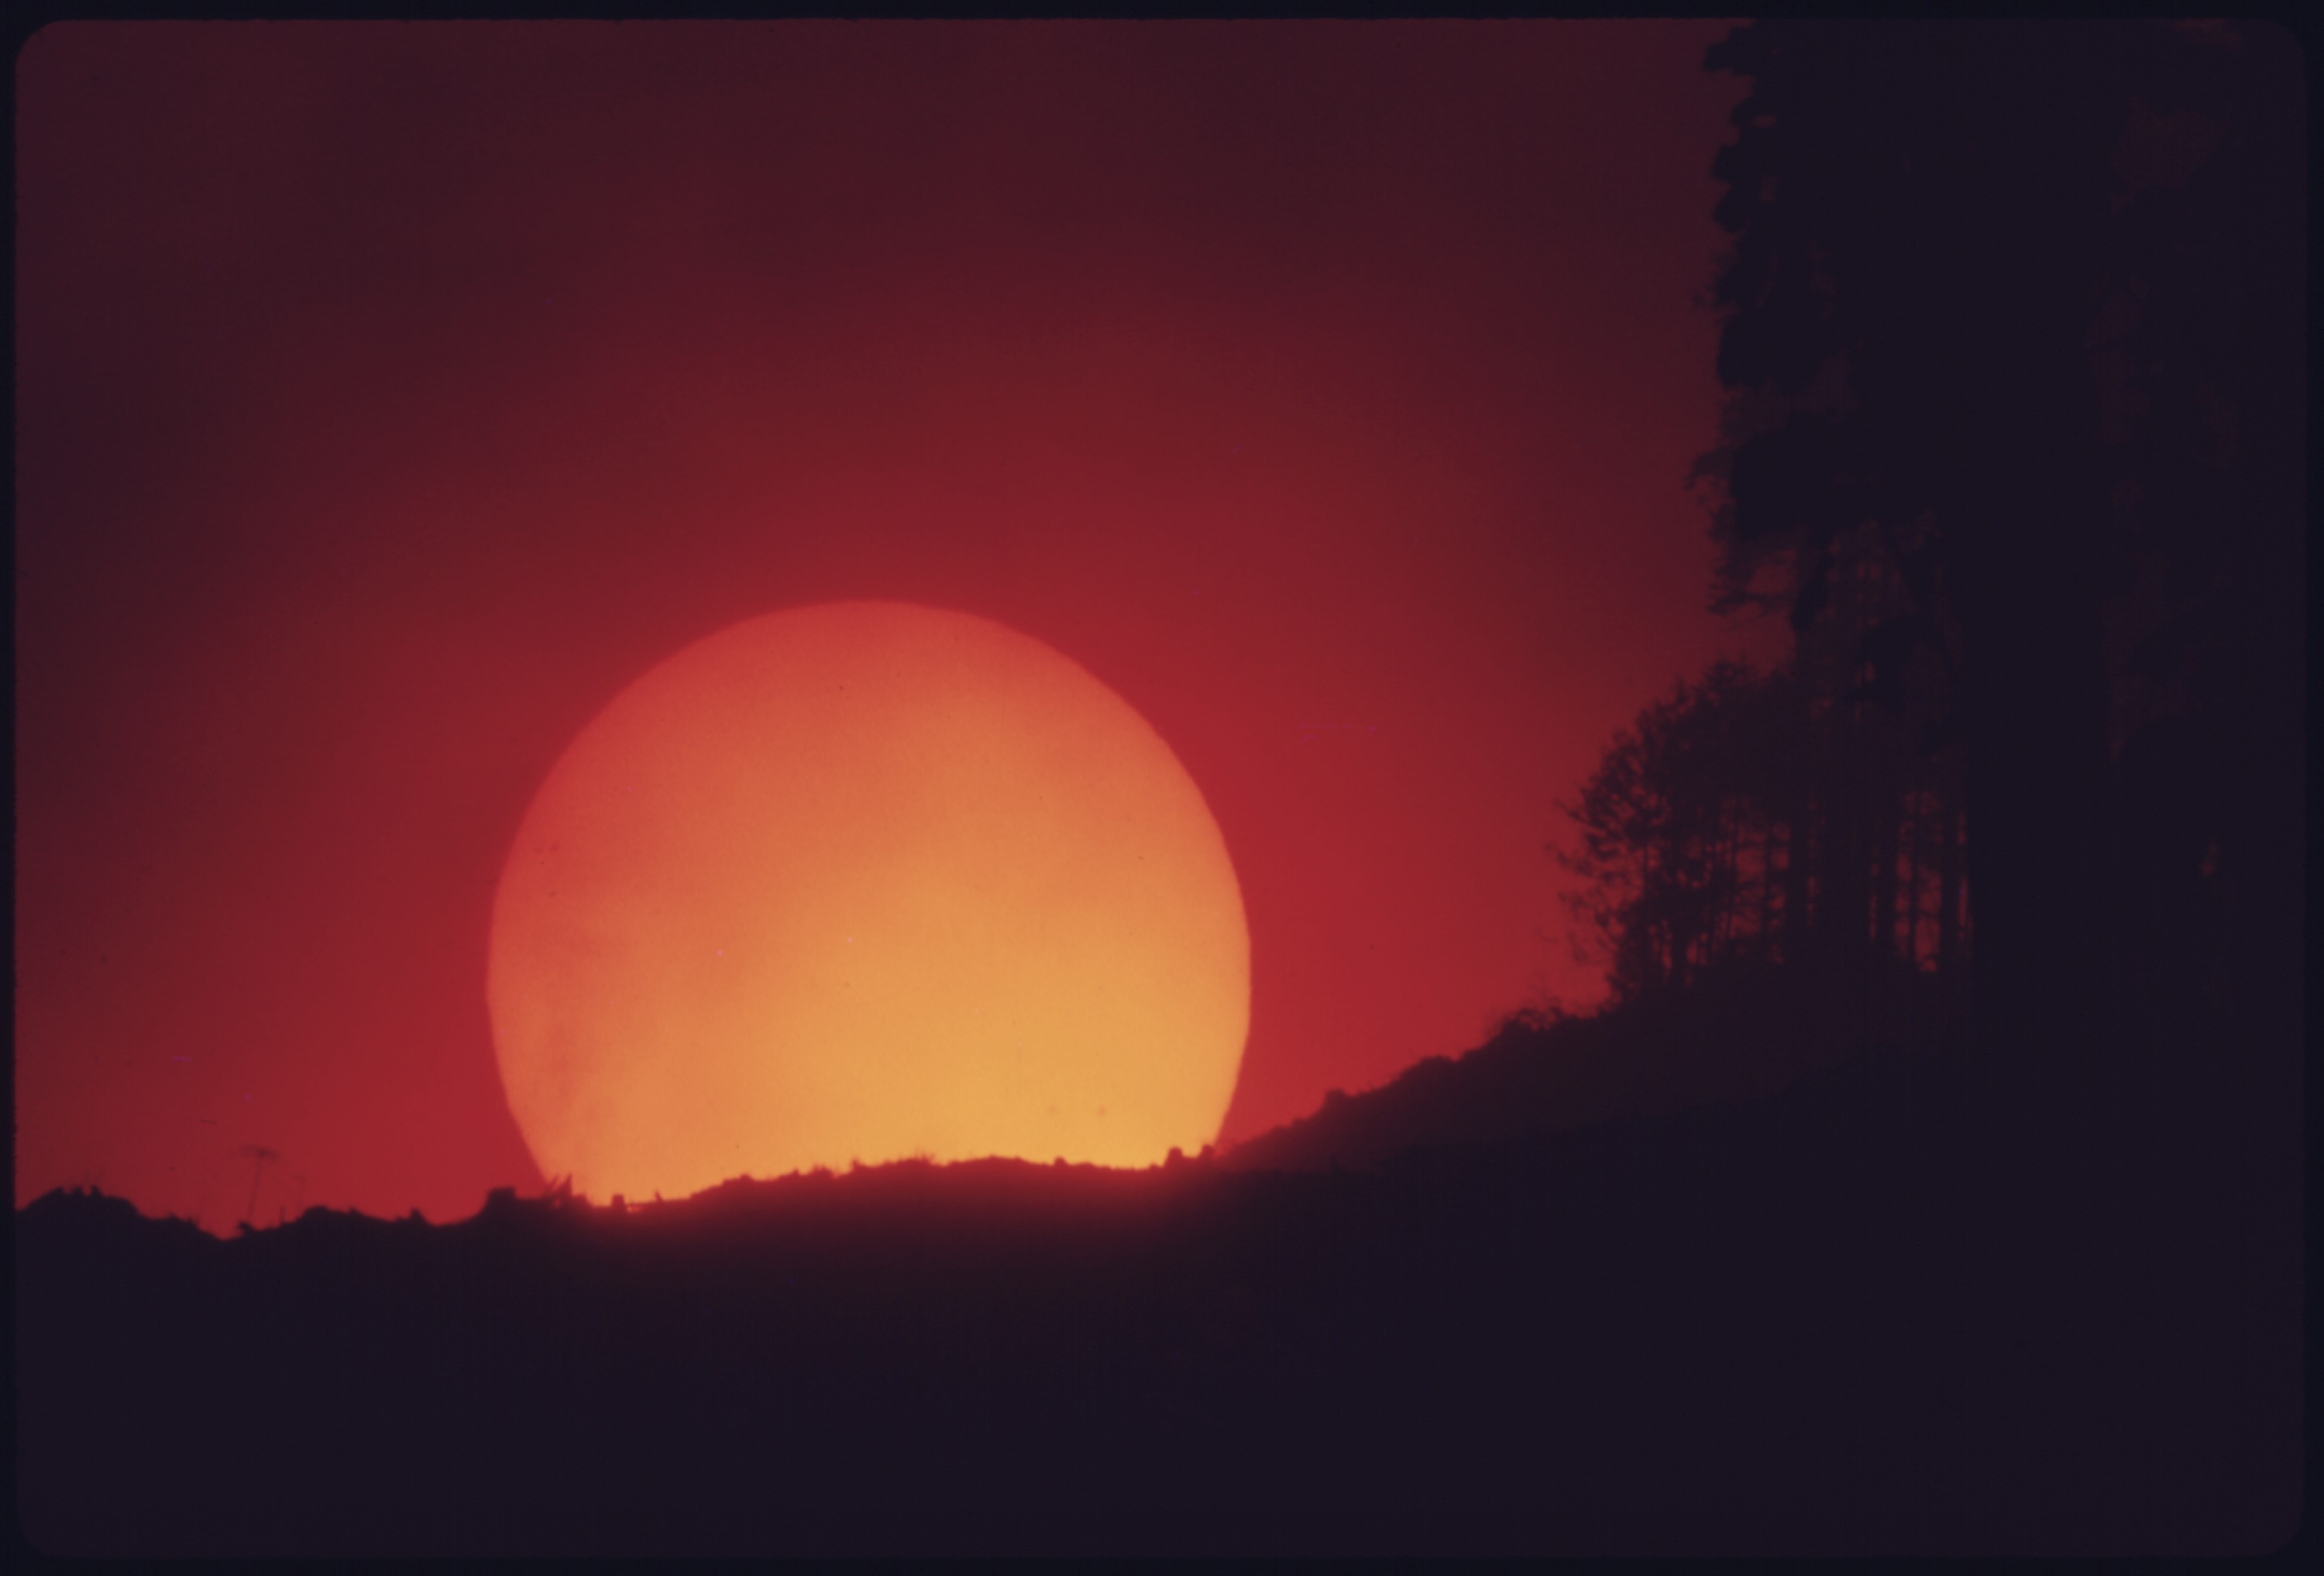 File:Rising or setting sun - NARA - 557629.jpg - Wikimedia Commons